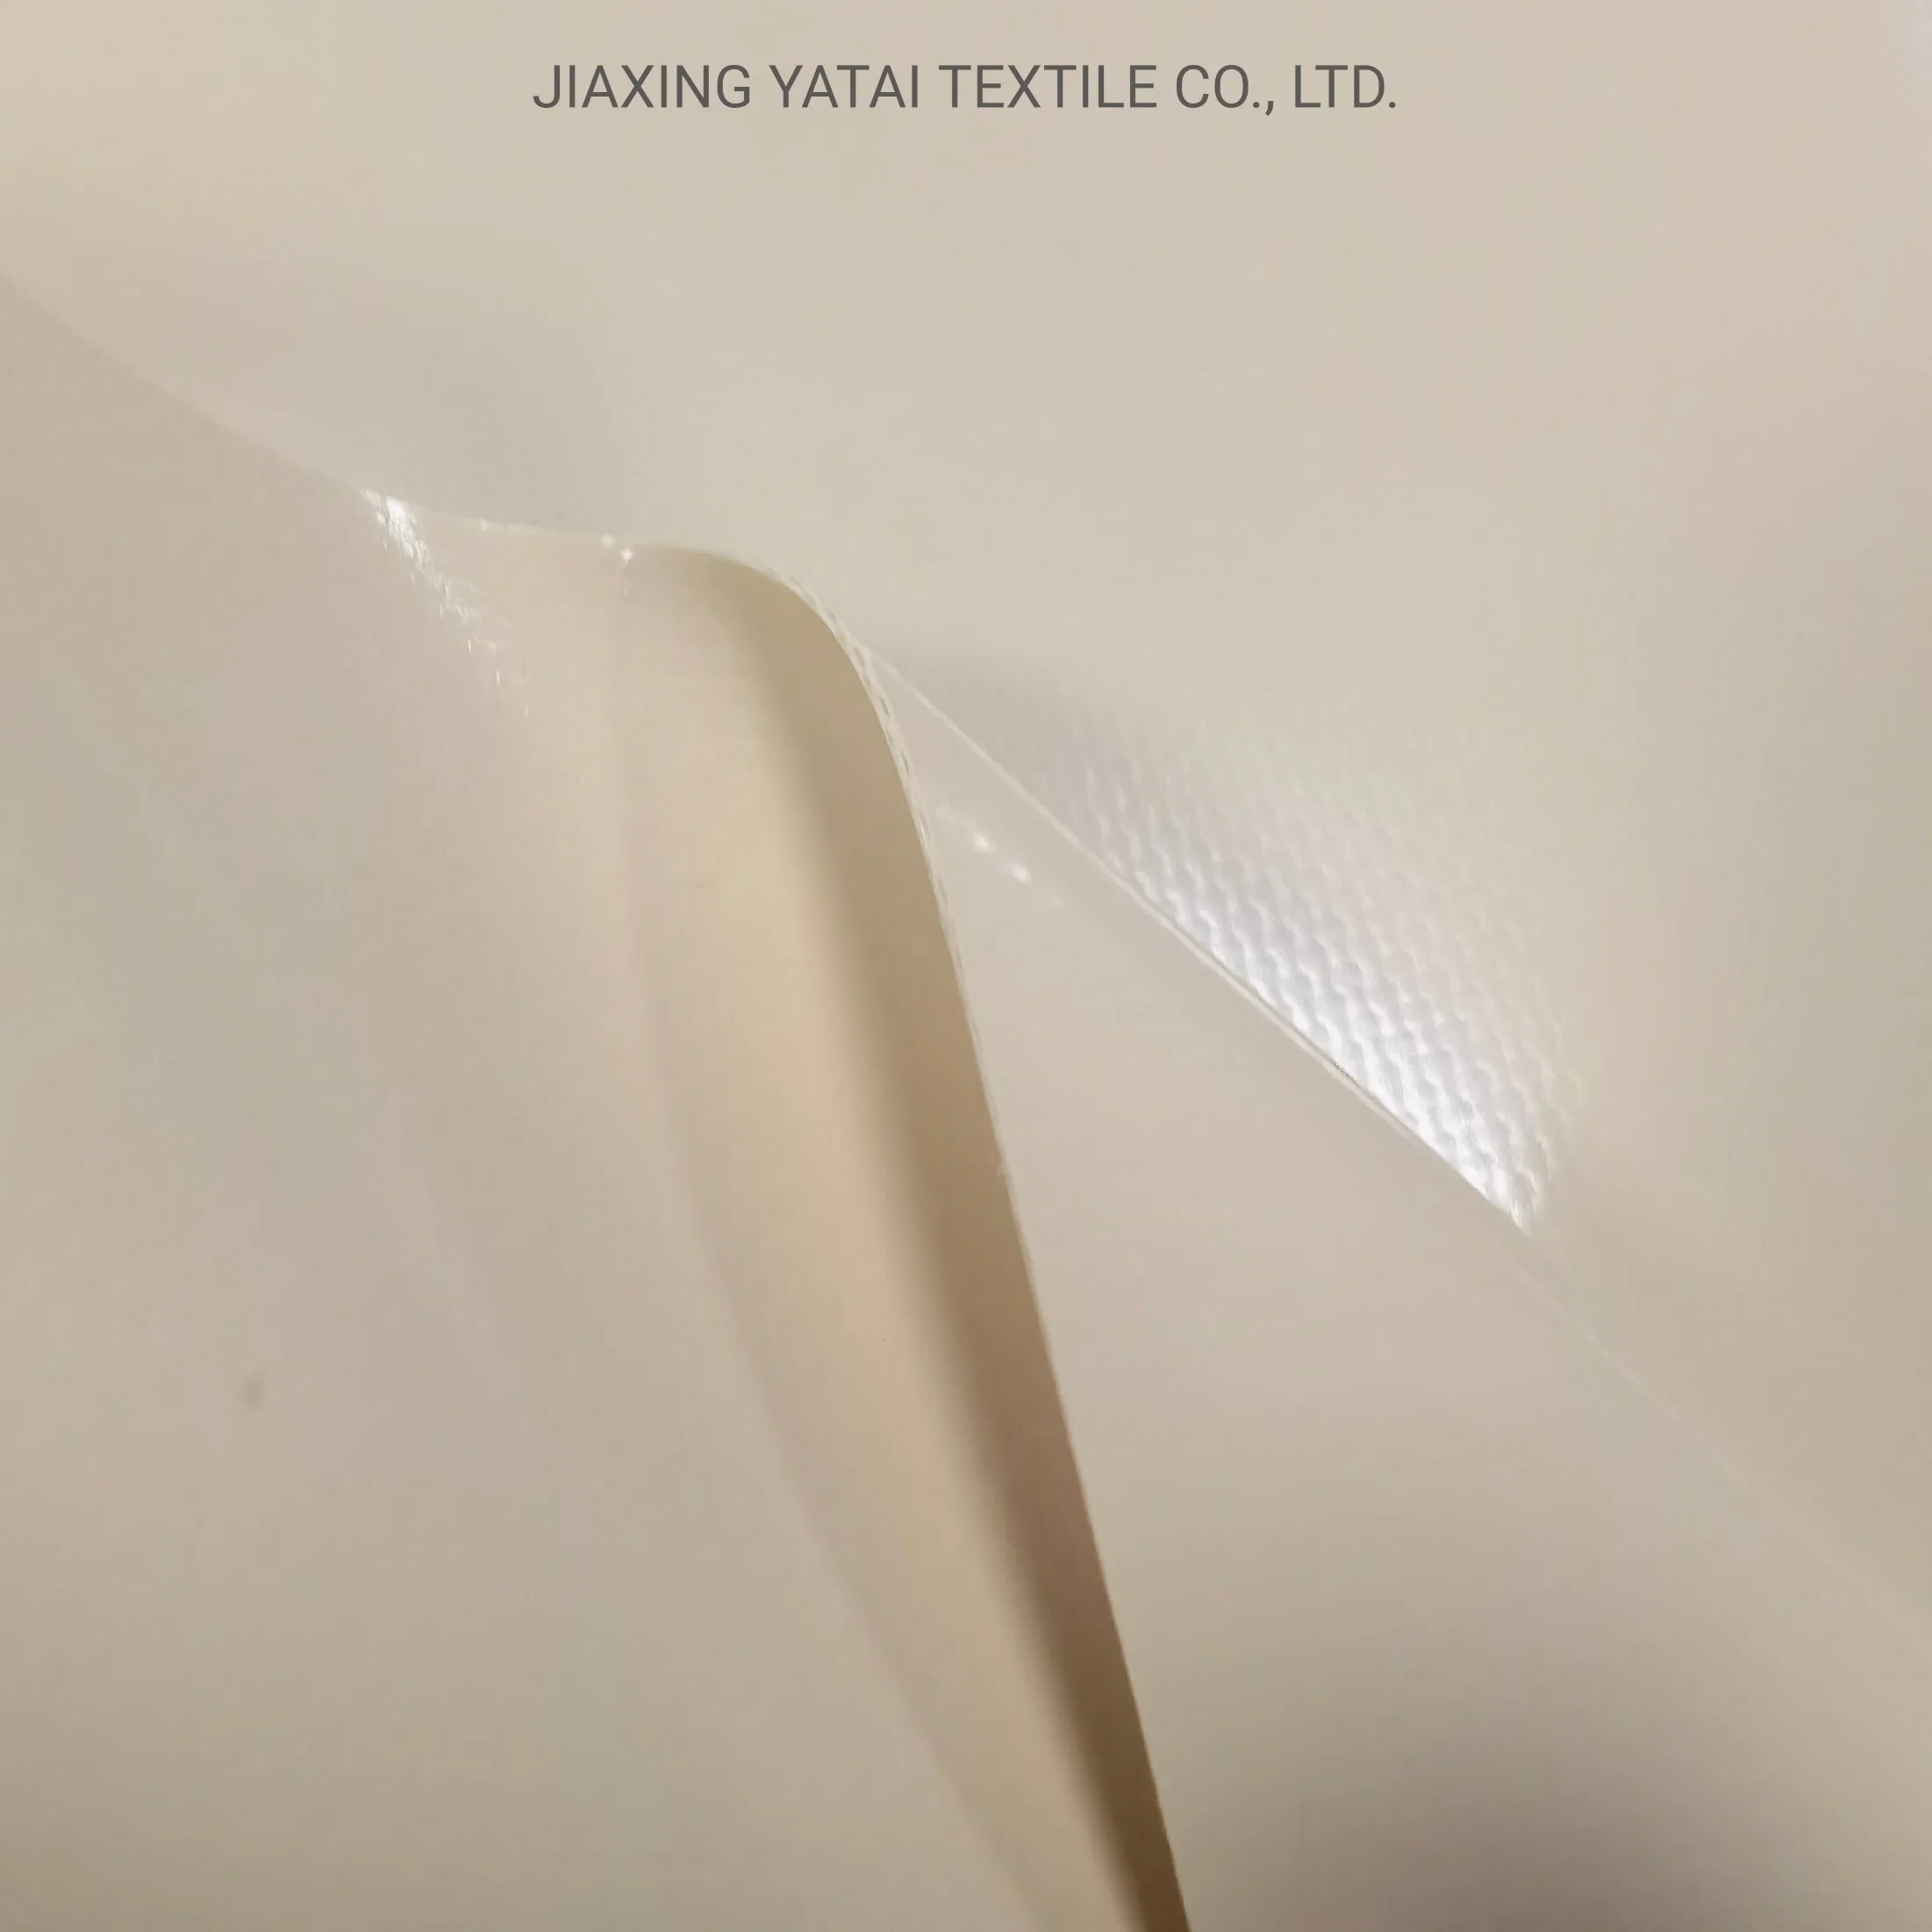 European Standard B1 Fr 100% Blockout 850GSM RoHS&Reach/PVDF Acrylic Lacquering PVC Tarpaulin Roof Tent Tarpauline Fabric